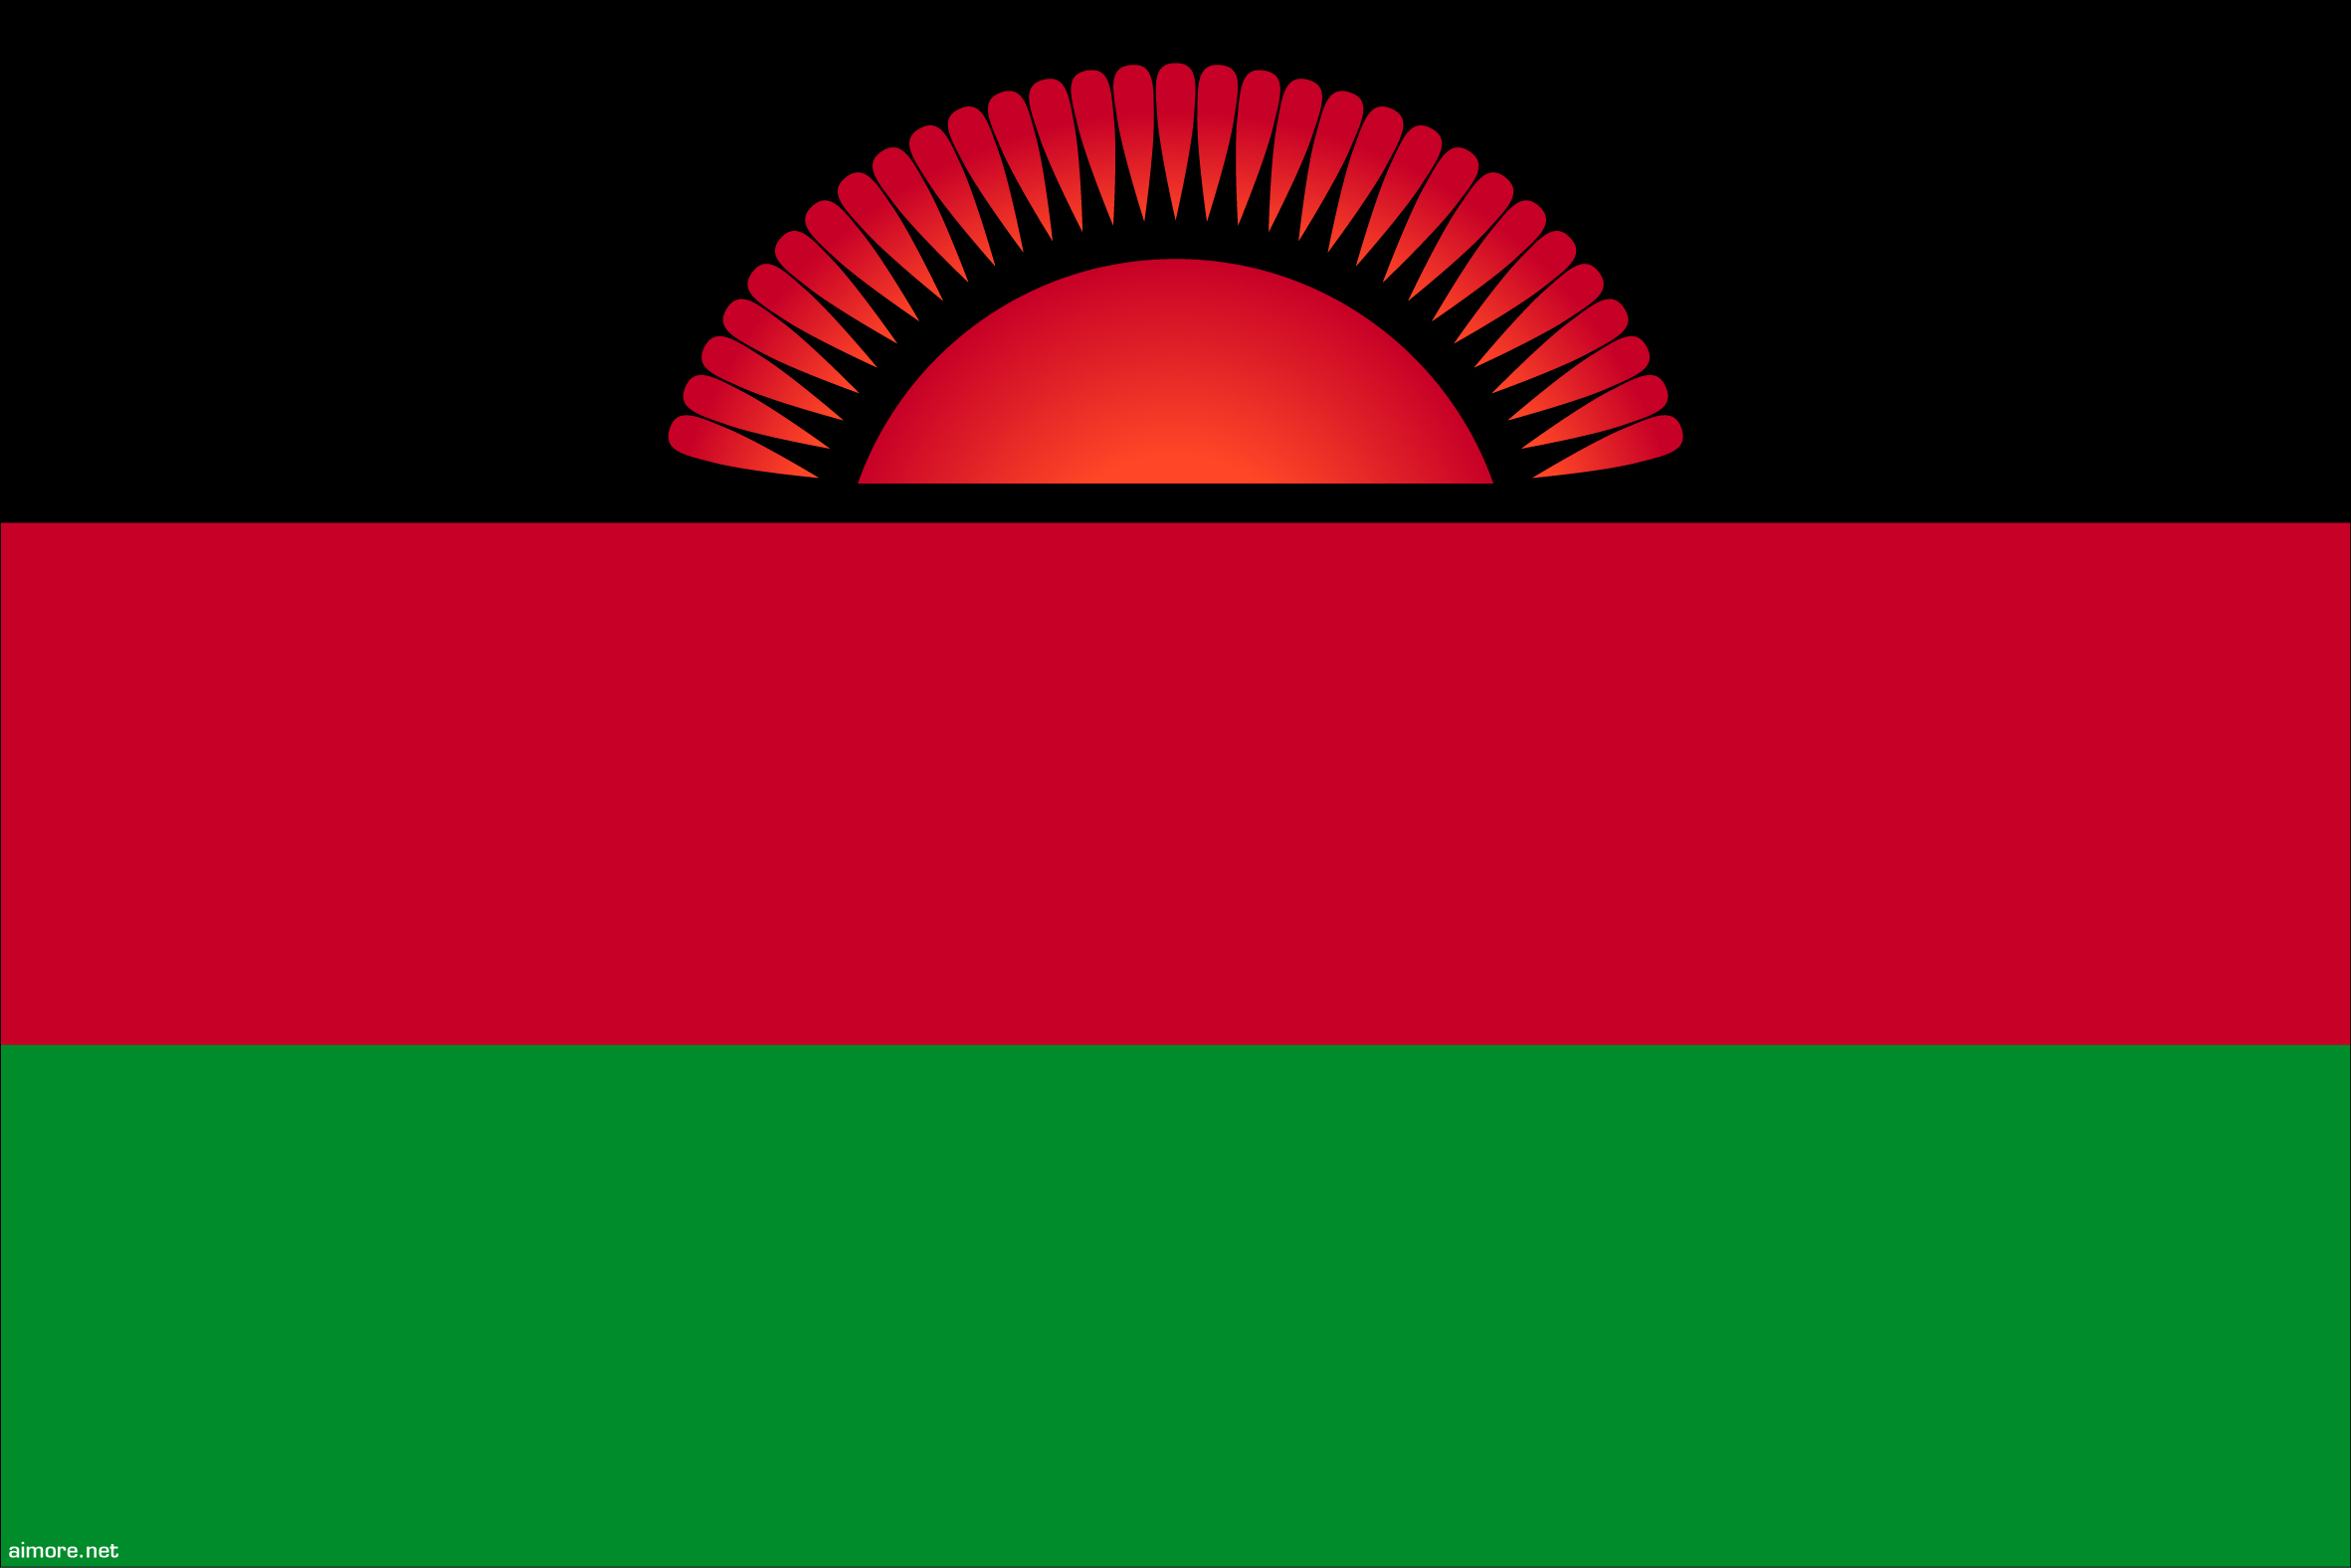 Bandeira Malawi, Malaui